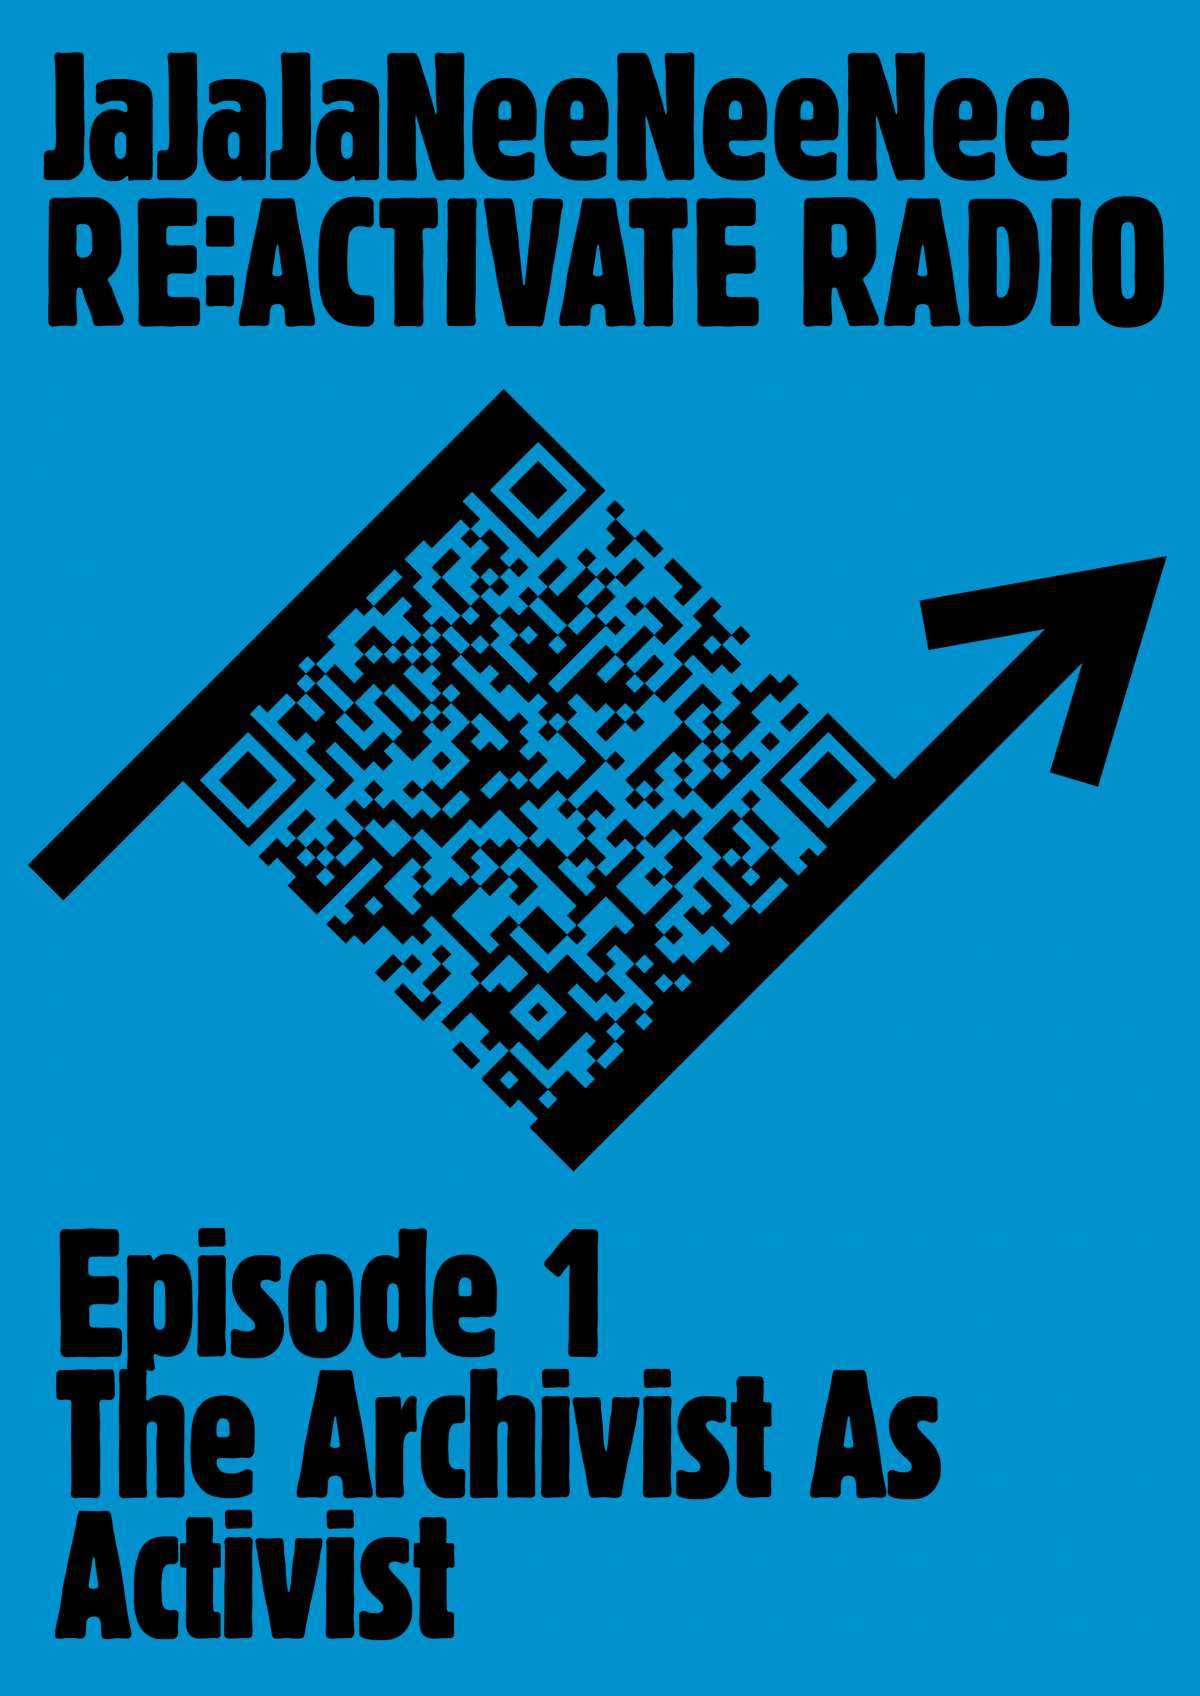 REACTIVATE RADIO Episode 1 Open Archief pic